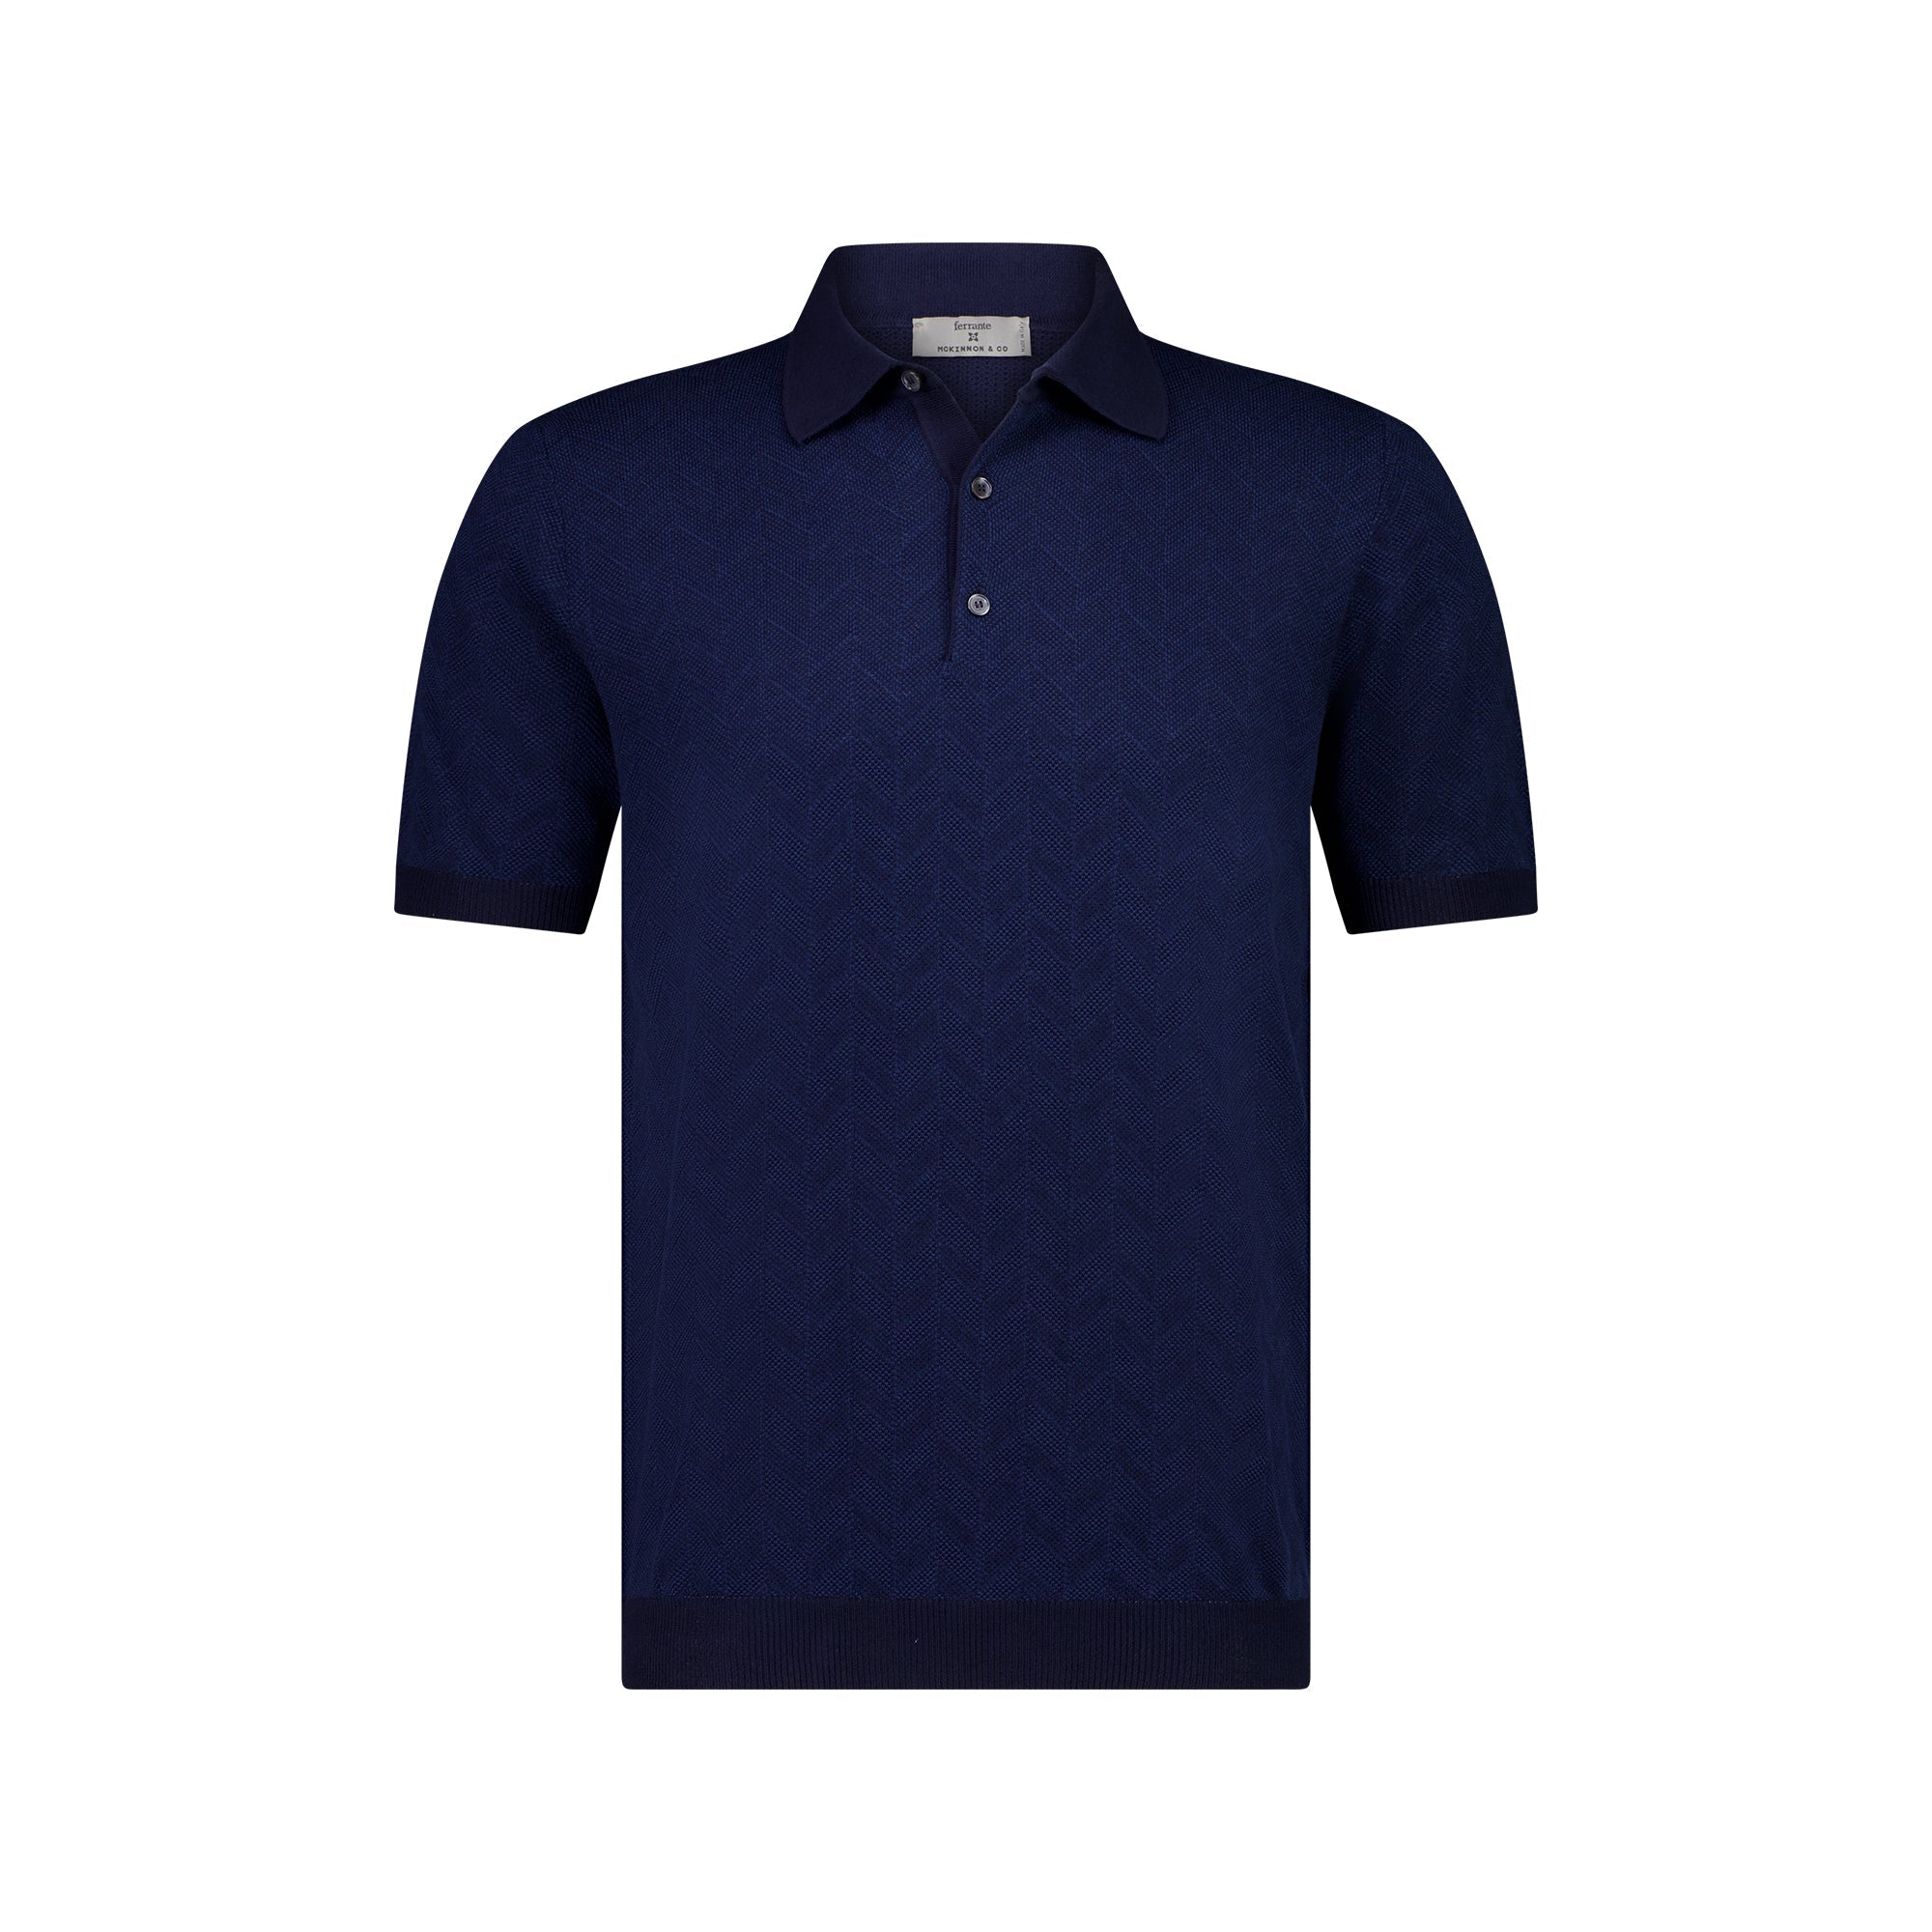 MCKINNON x FERRANTE Knitted Cotton Polo in NAVY BLUE - Henry BucksShirts38SS230089 - NVBL - 50